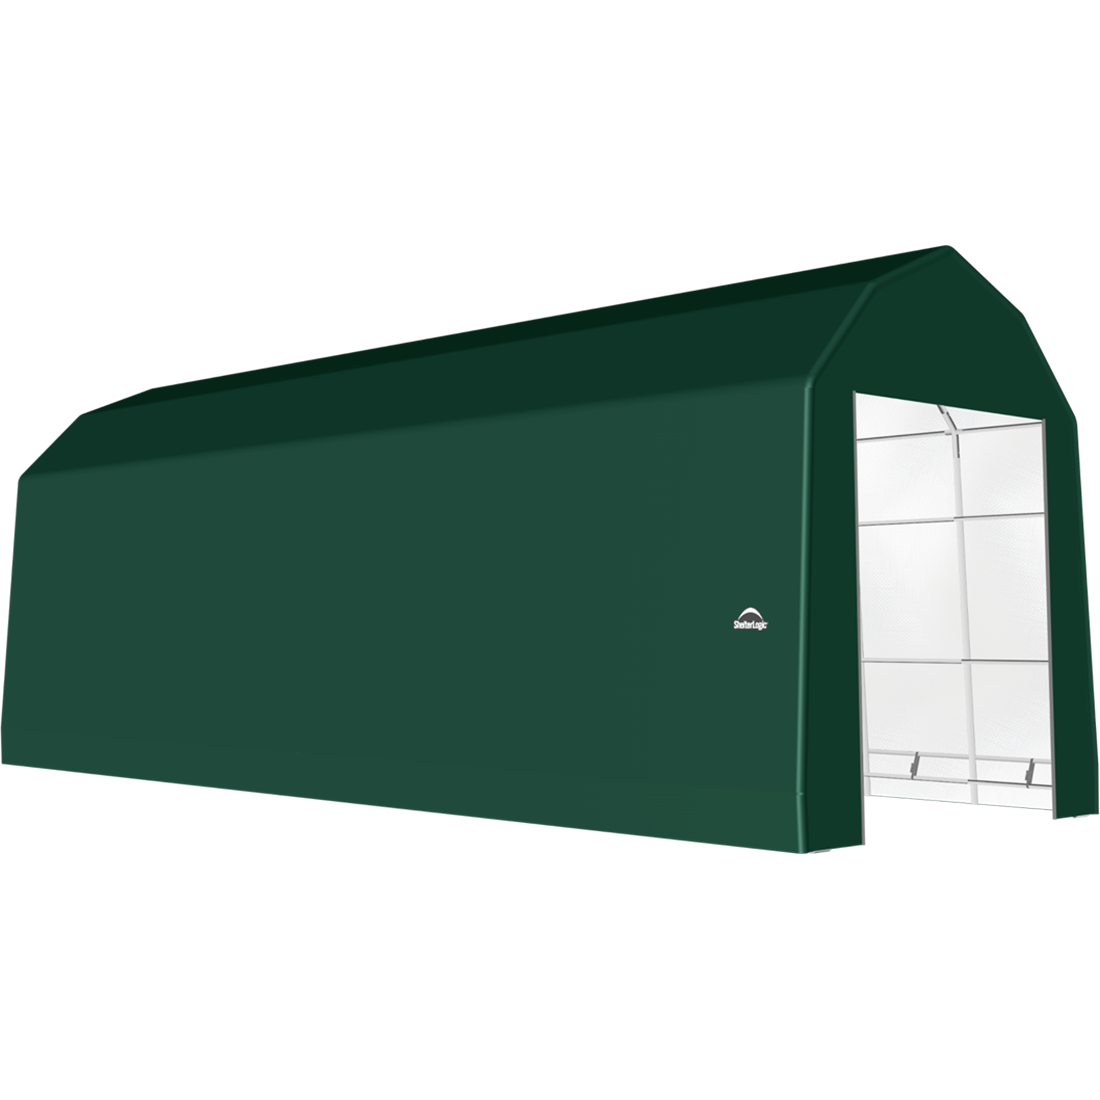 ShelterTech SP Series Barn Shelter, 15 ft. x 32 ft. x 17 ft. Heavy Duty PVC 14.5 oz. Green